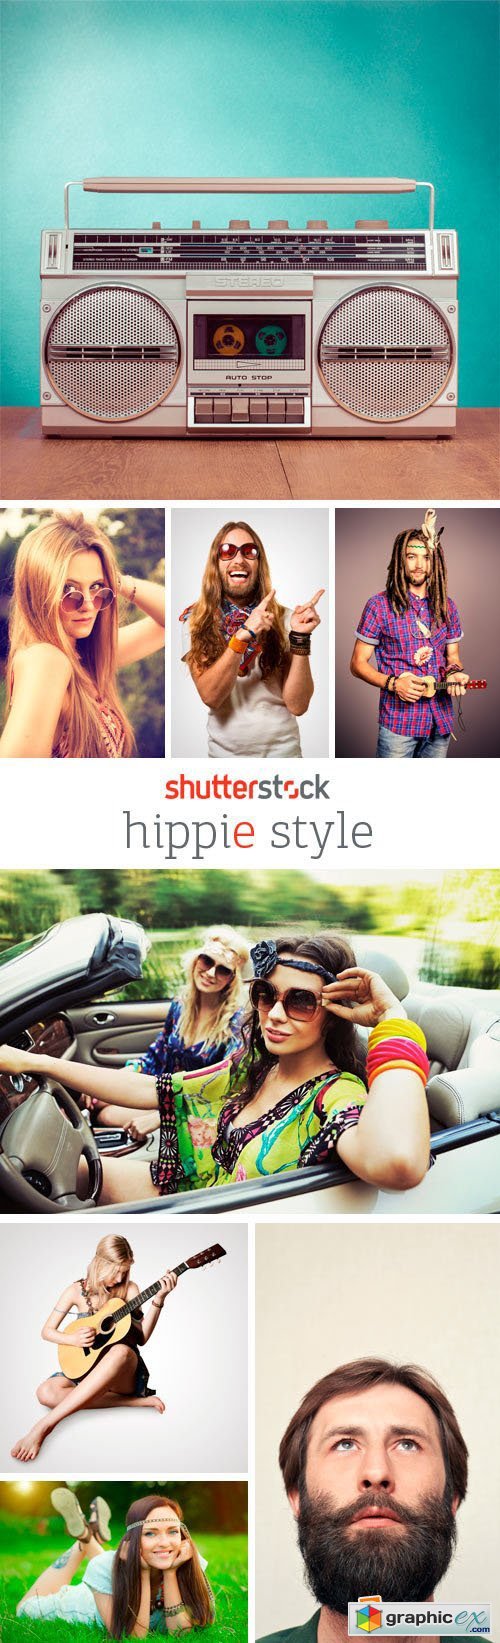 Amazing SS - Hippie Style, 25xJPG